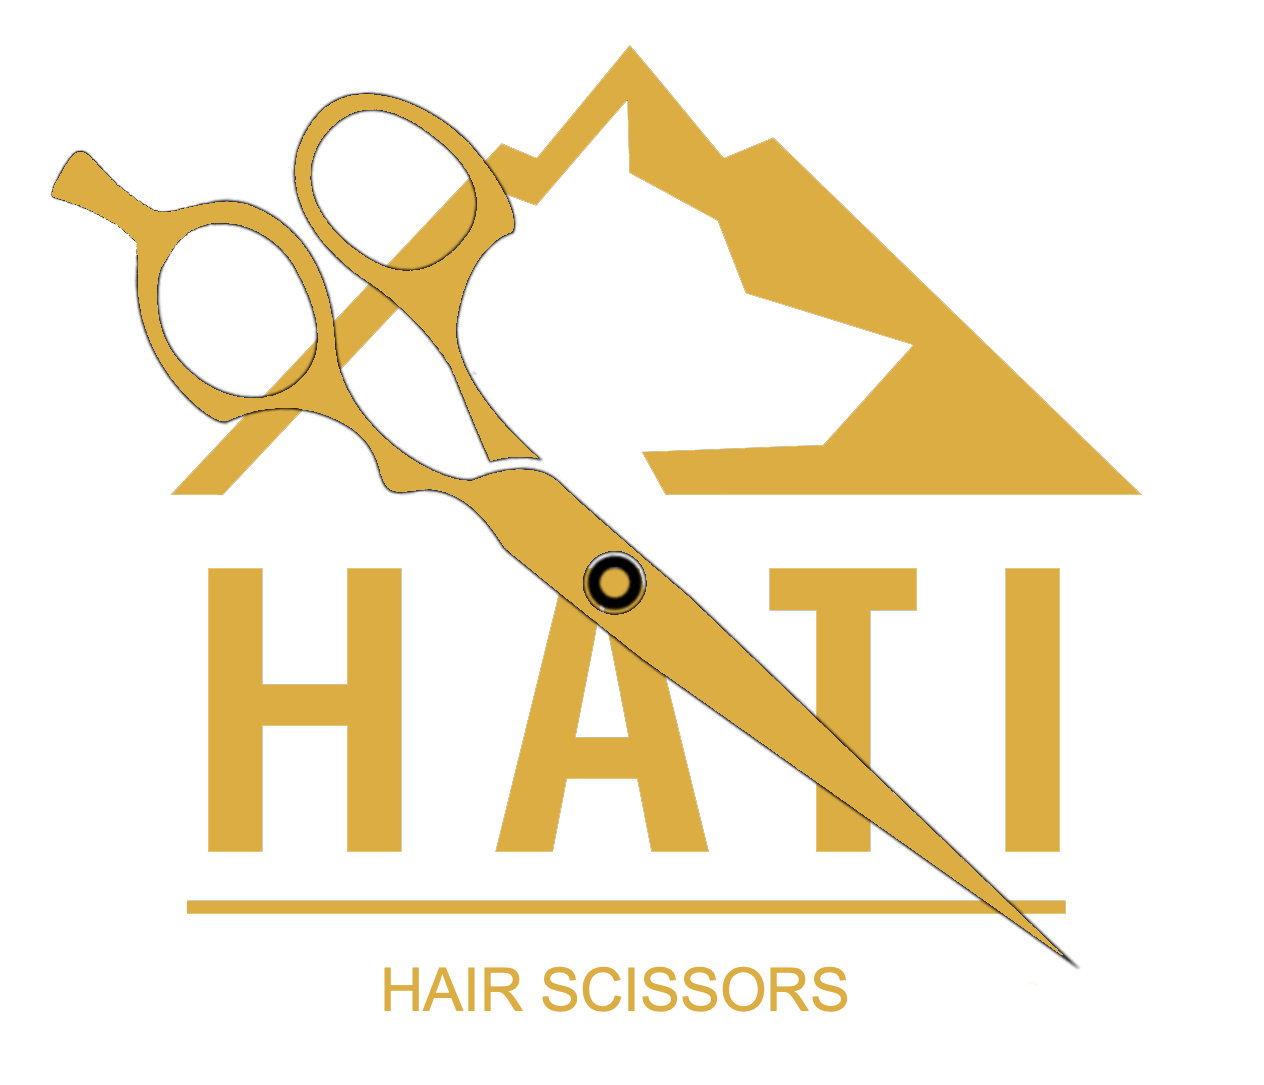 Hati Hair Scissors